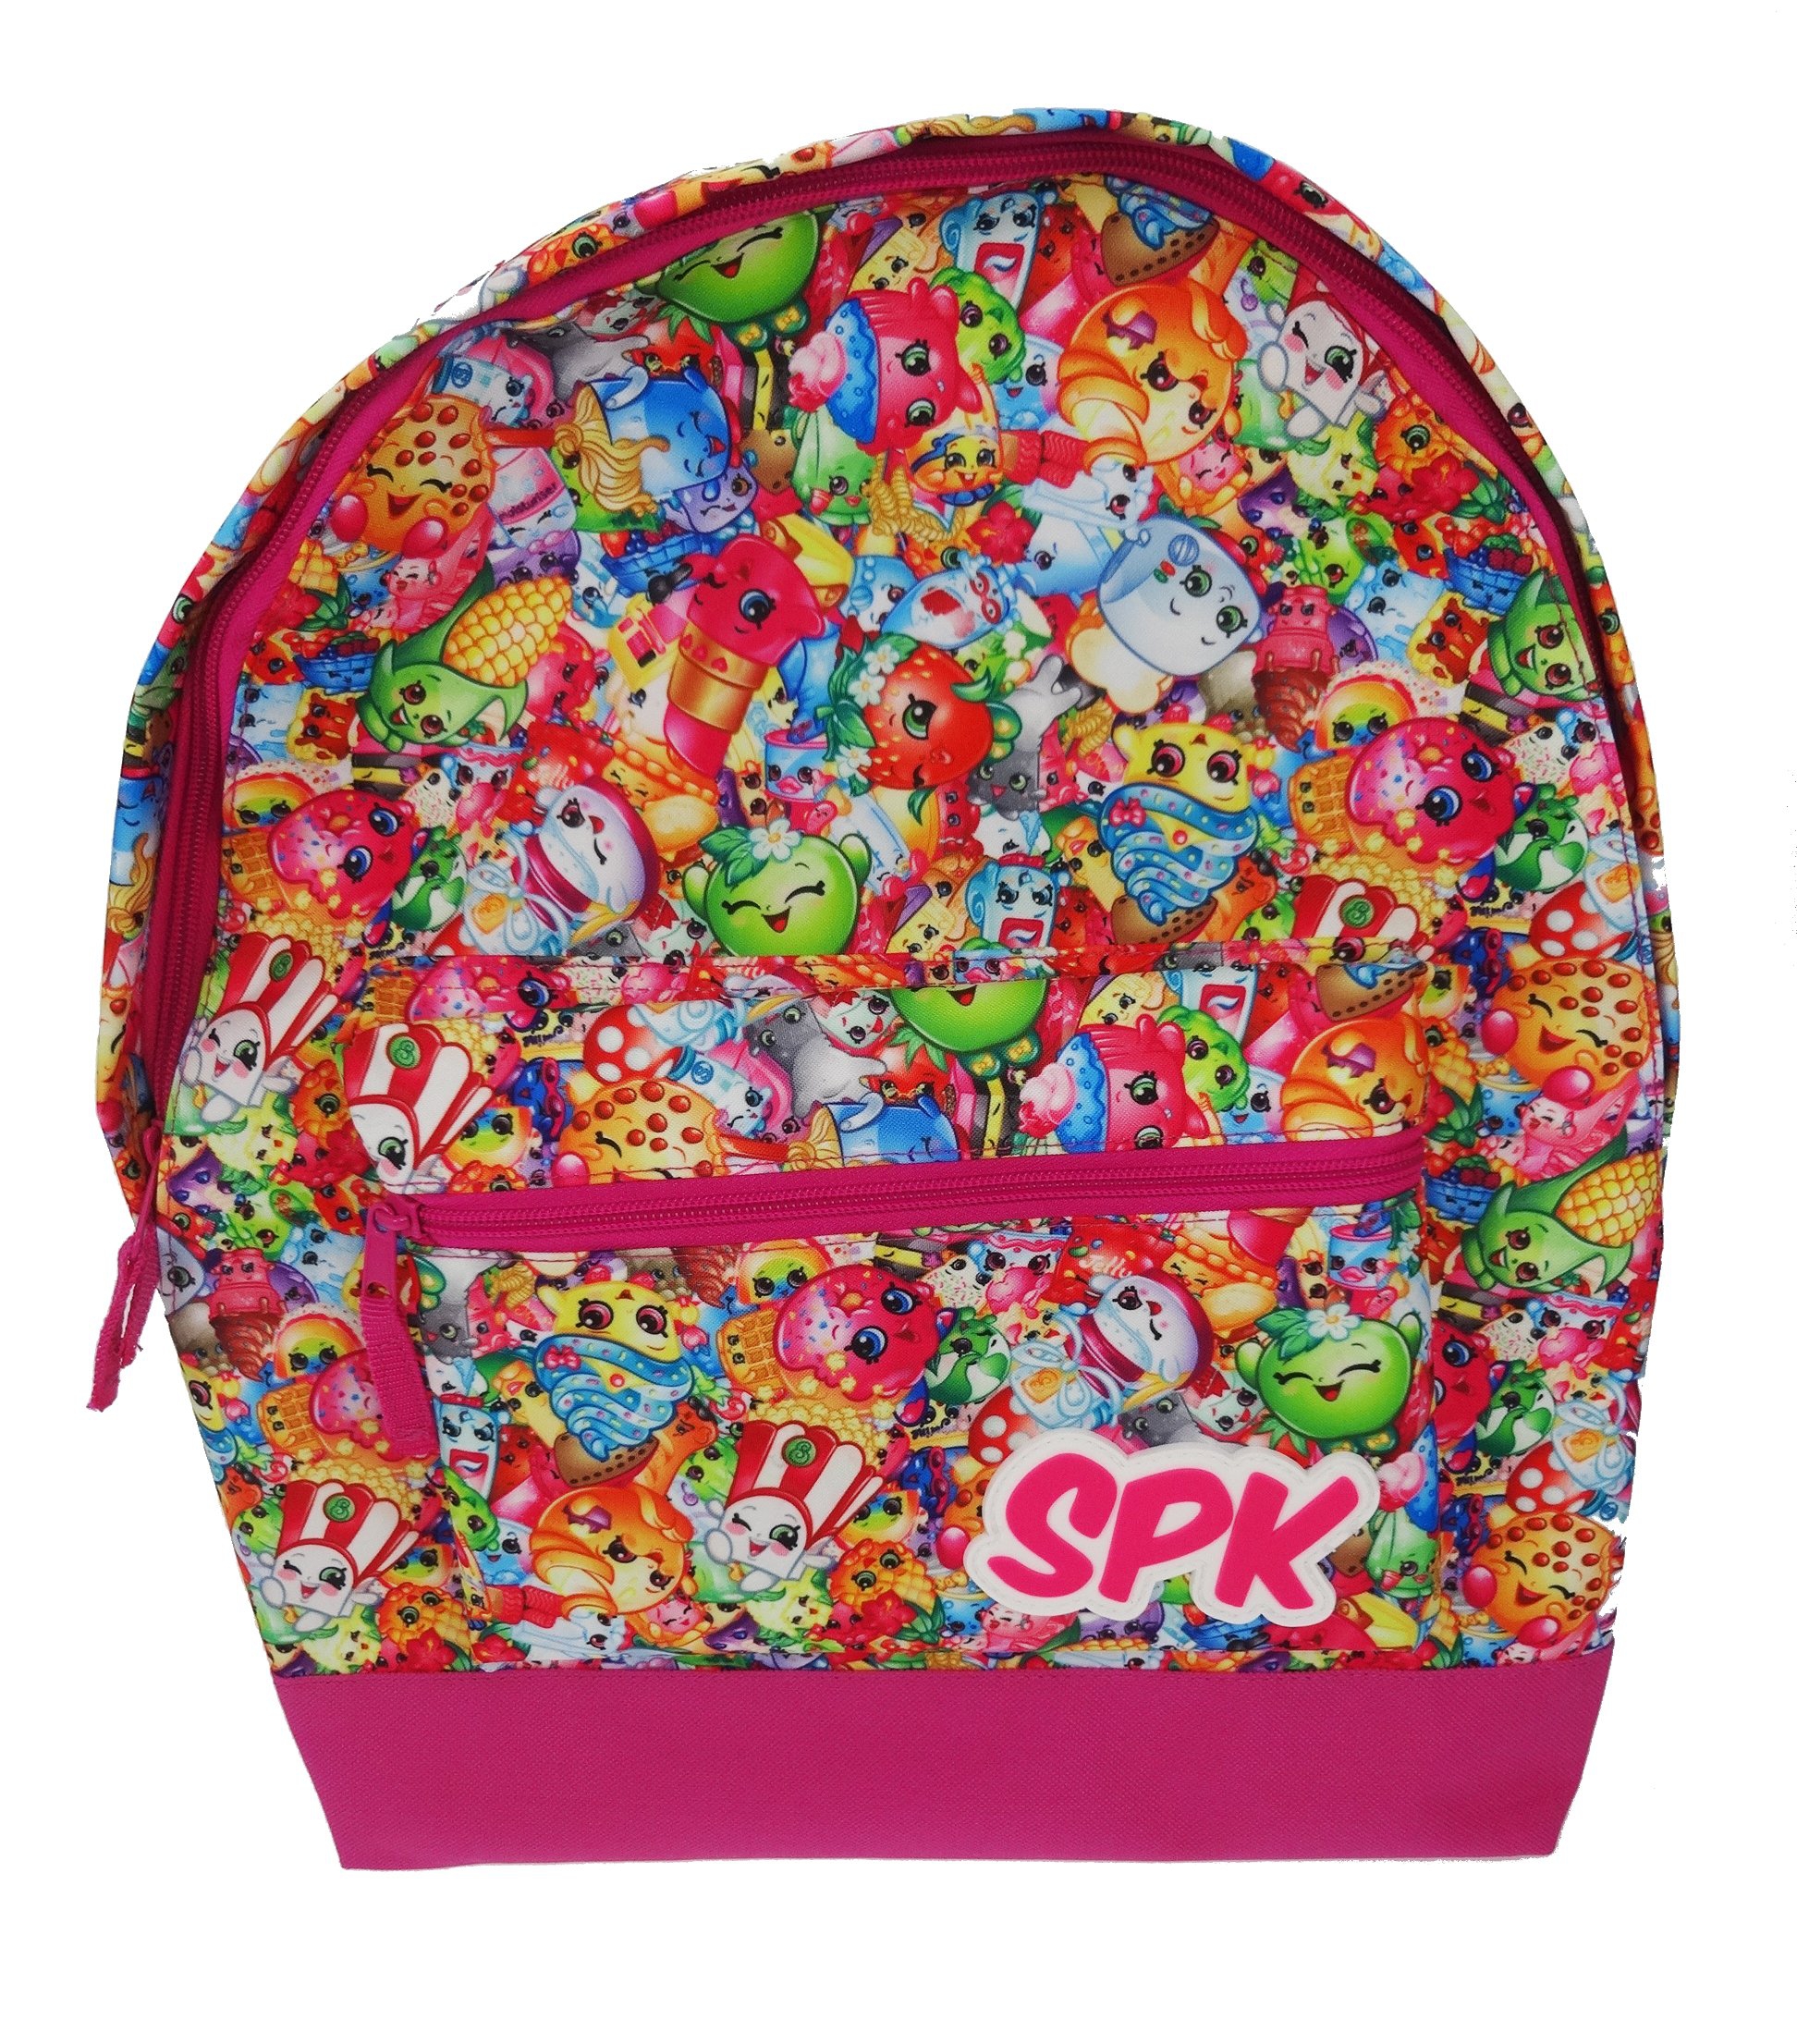 Shopkins 'Spk' Roxy School Bag Rucksack Backpack